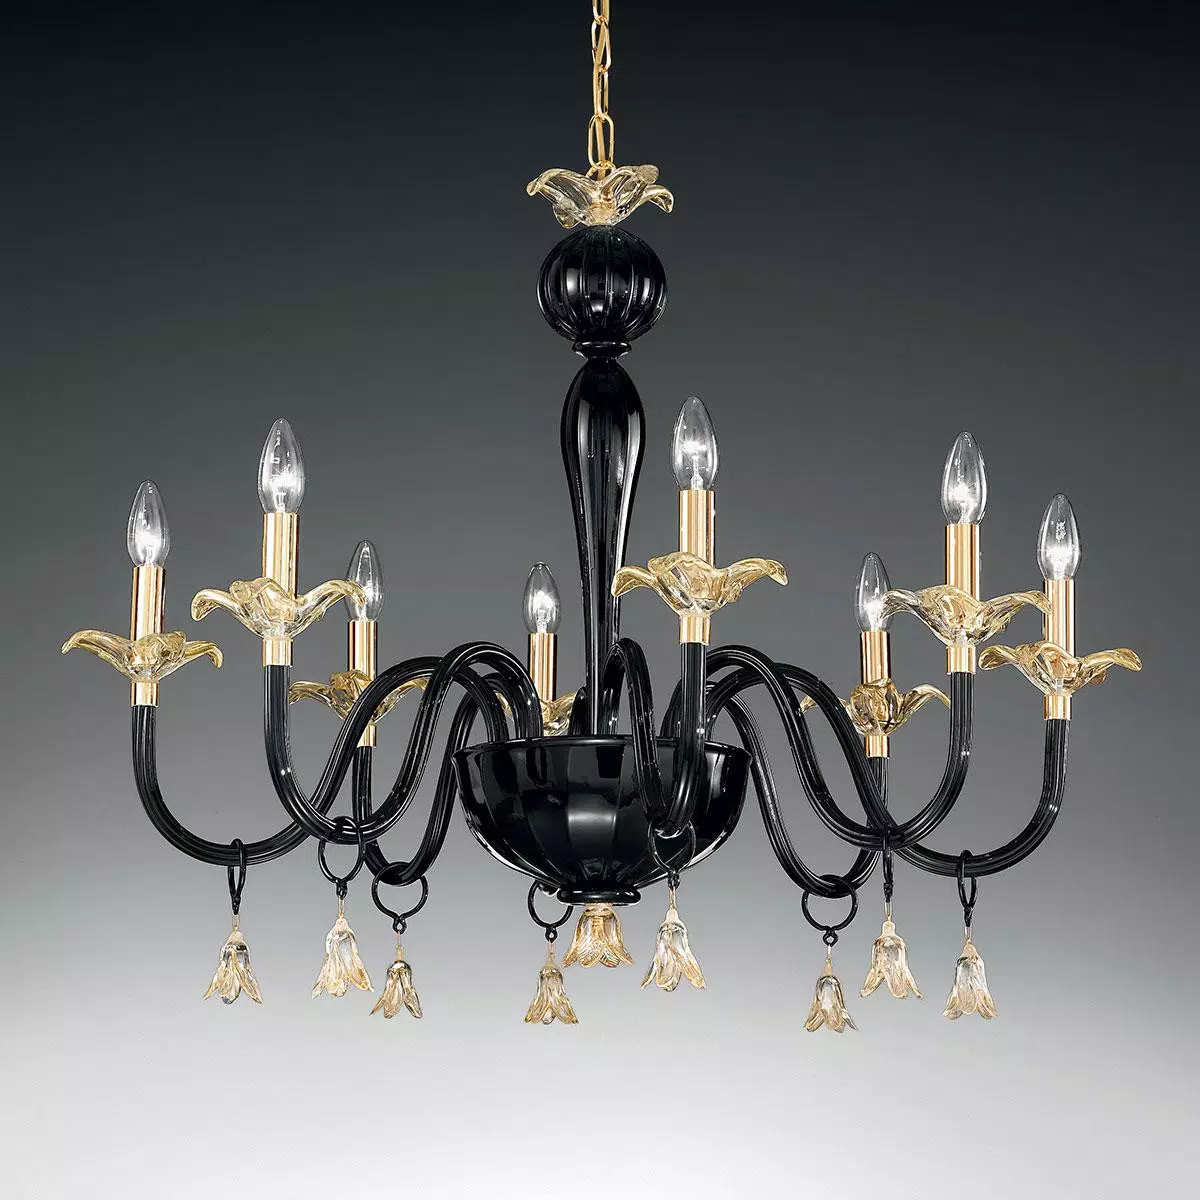 "Pendagli" Murano glass chandelier - 8 lights - black and gold